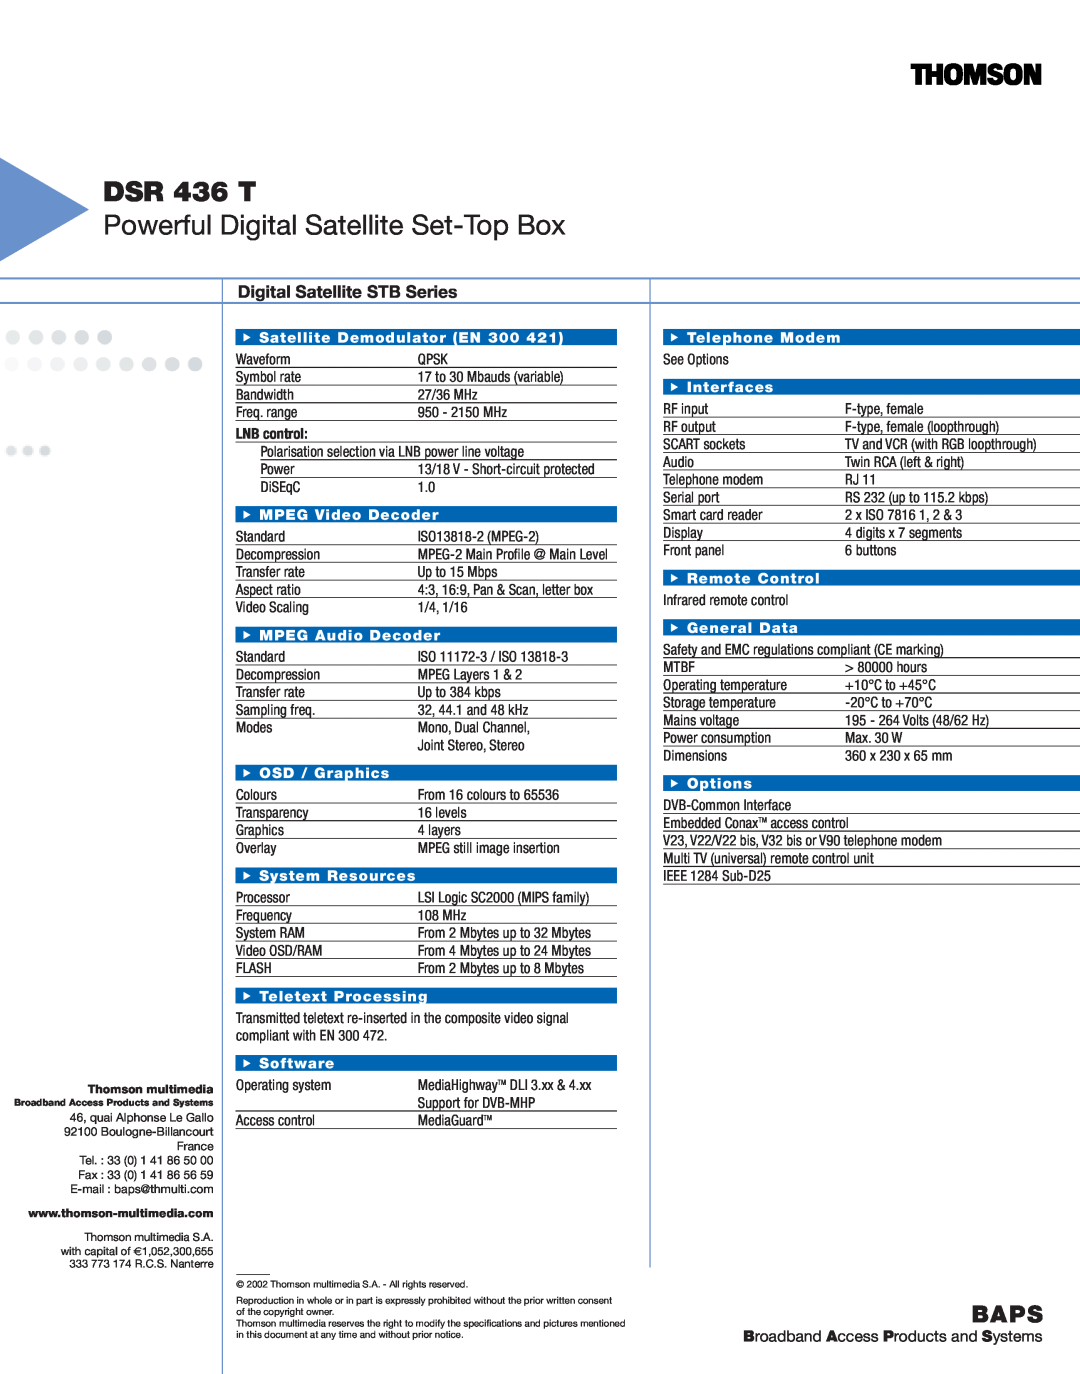 Technicolor - Thomson DSR 436 T specifications Powerful Digital Satellite Set-Top Box, Baps, Digital Satellite STB Series 